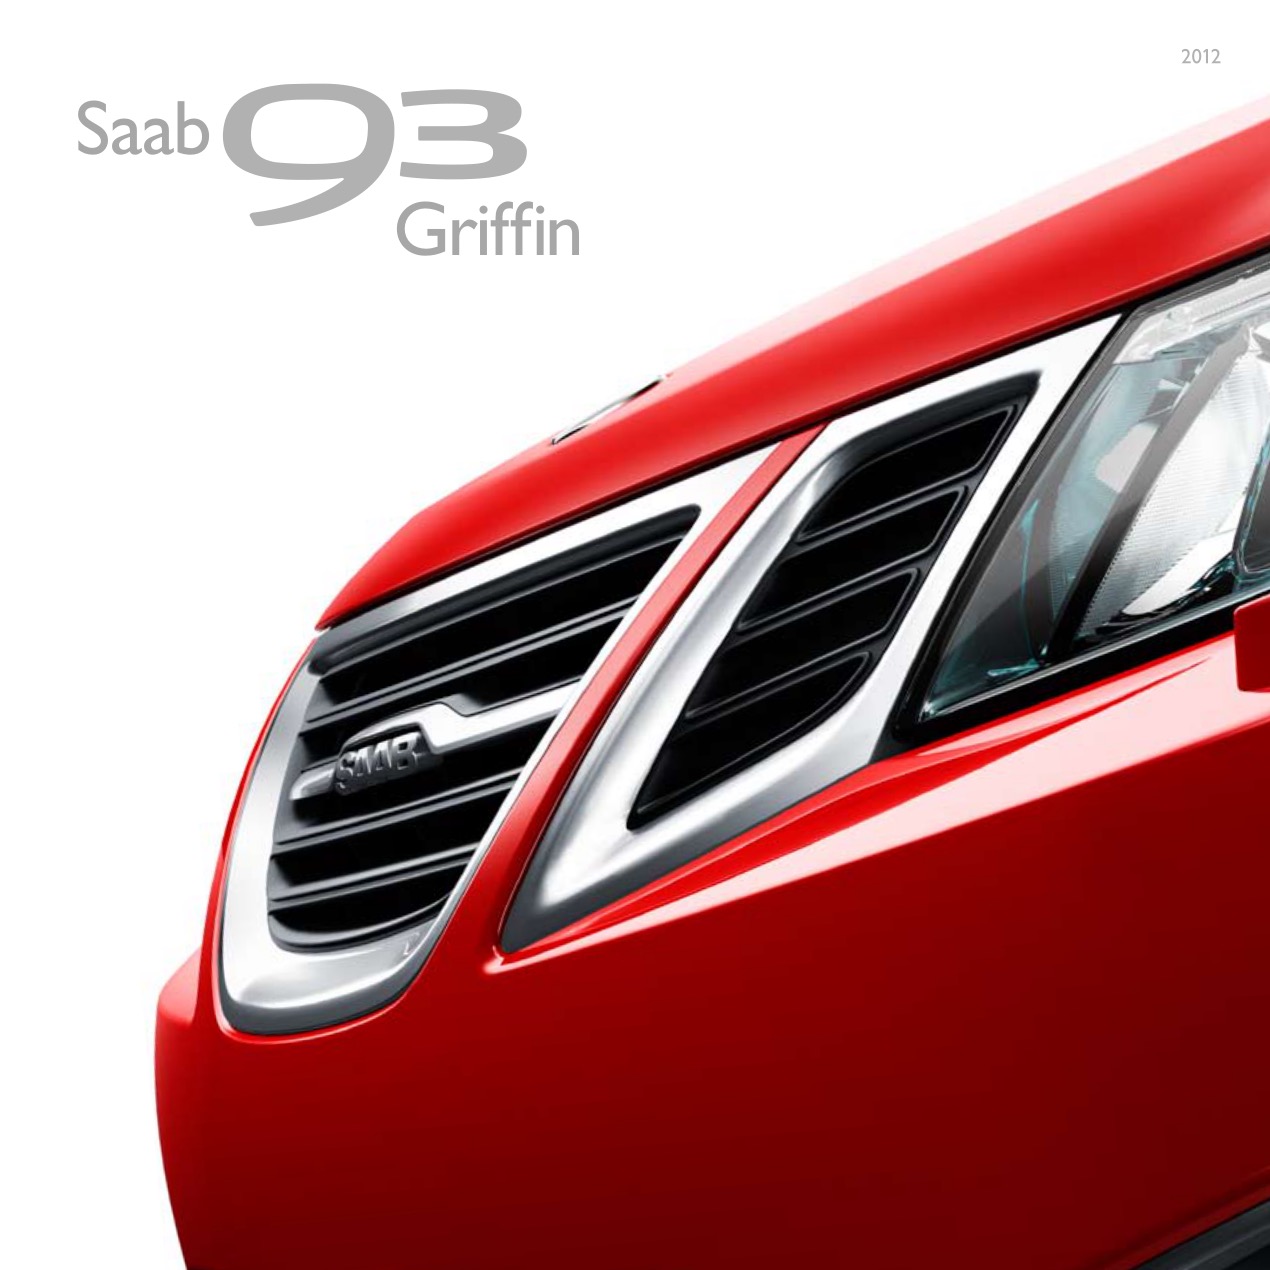 2012 Saab 9-3 Griffin